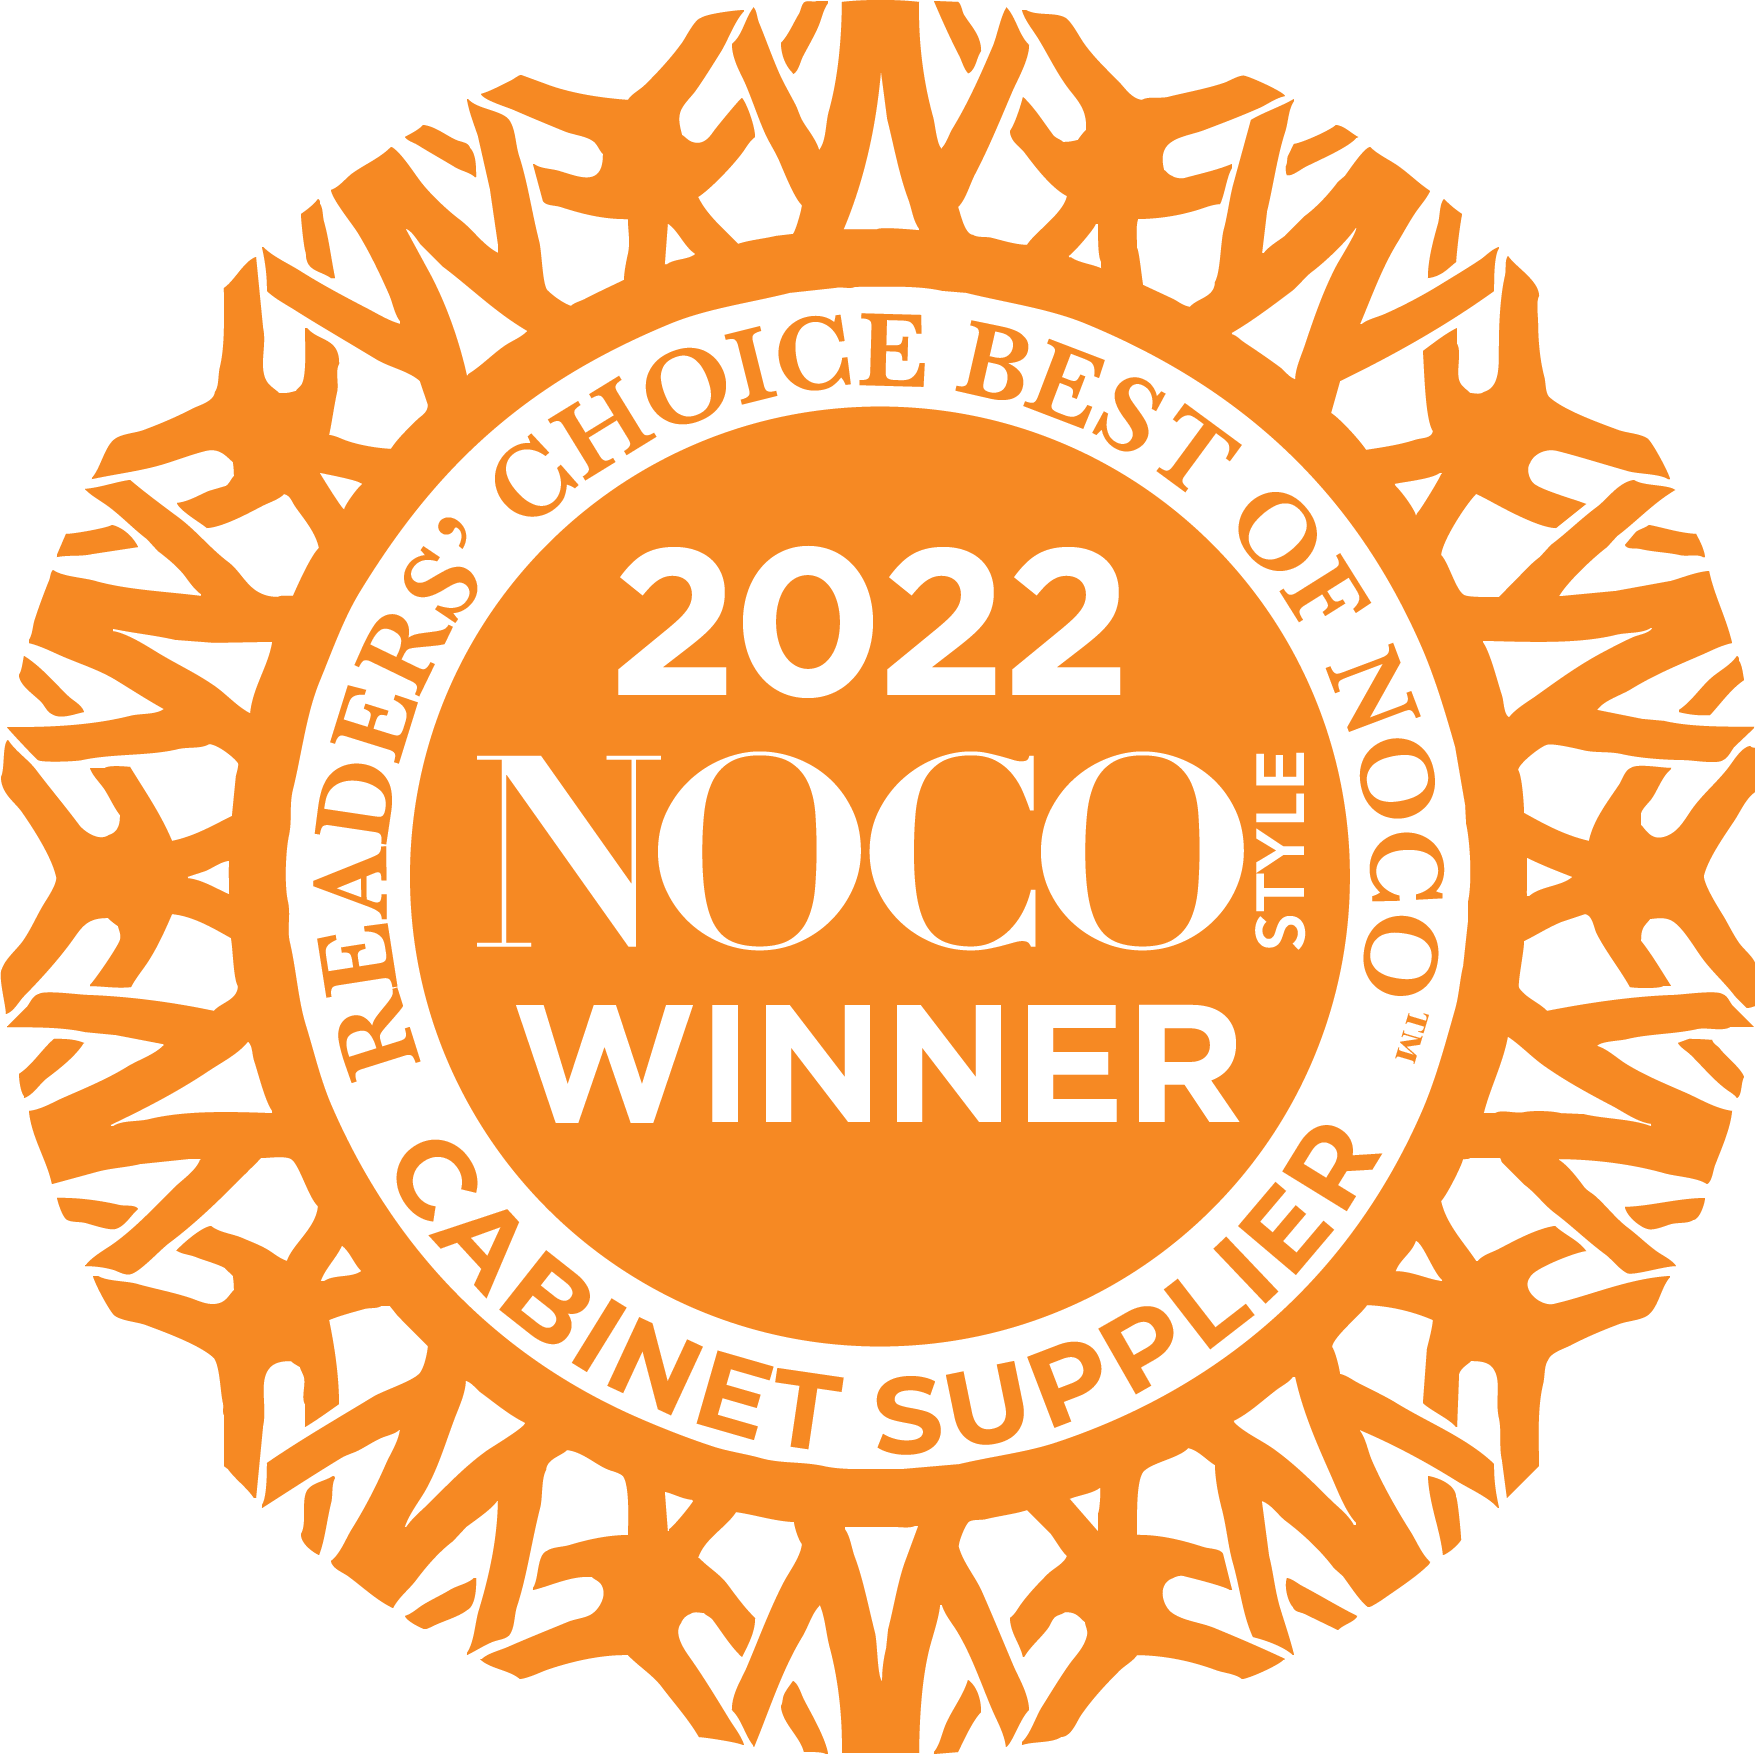 Best Cabinet Supplier in Northern Colorado - Winner 2022 - NOCO Style